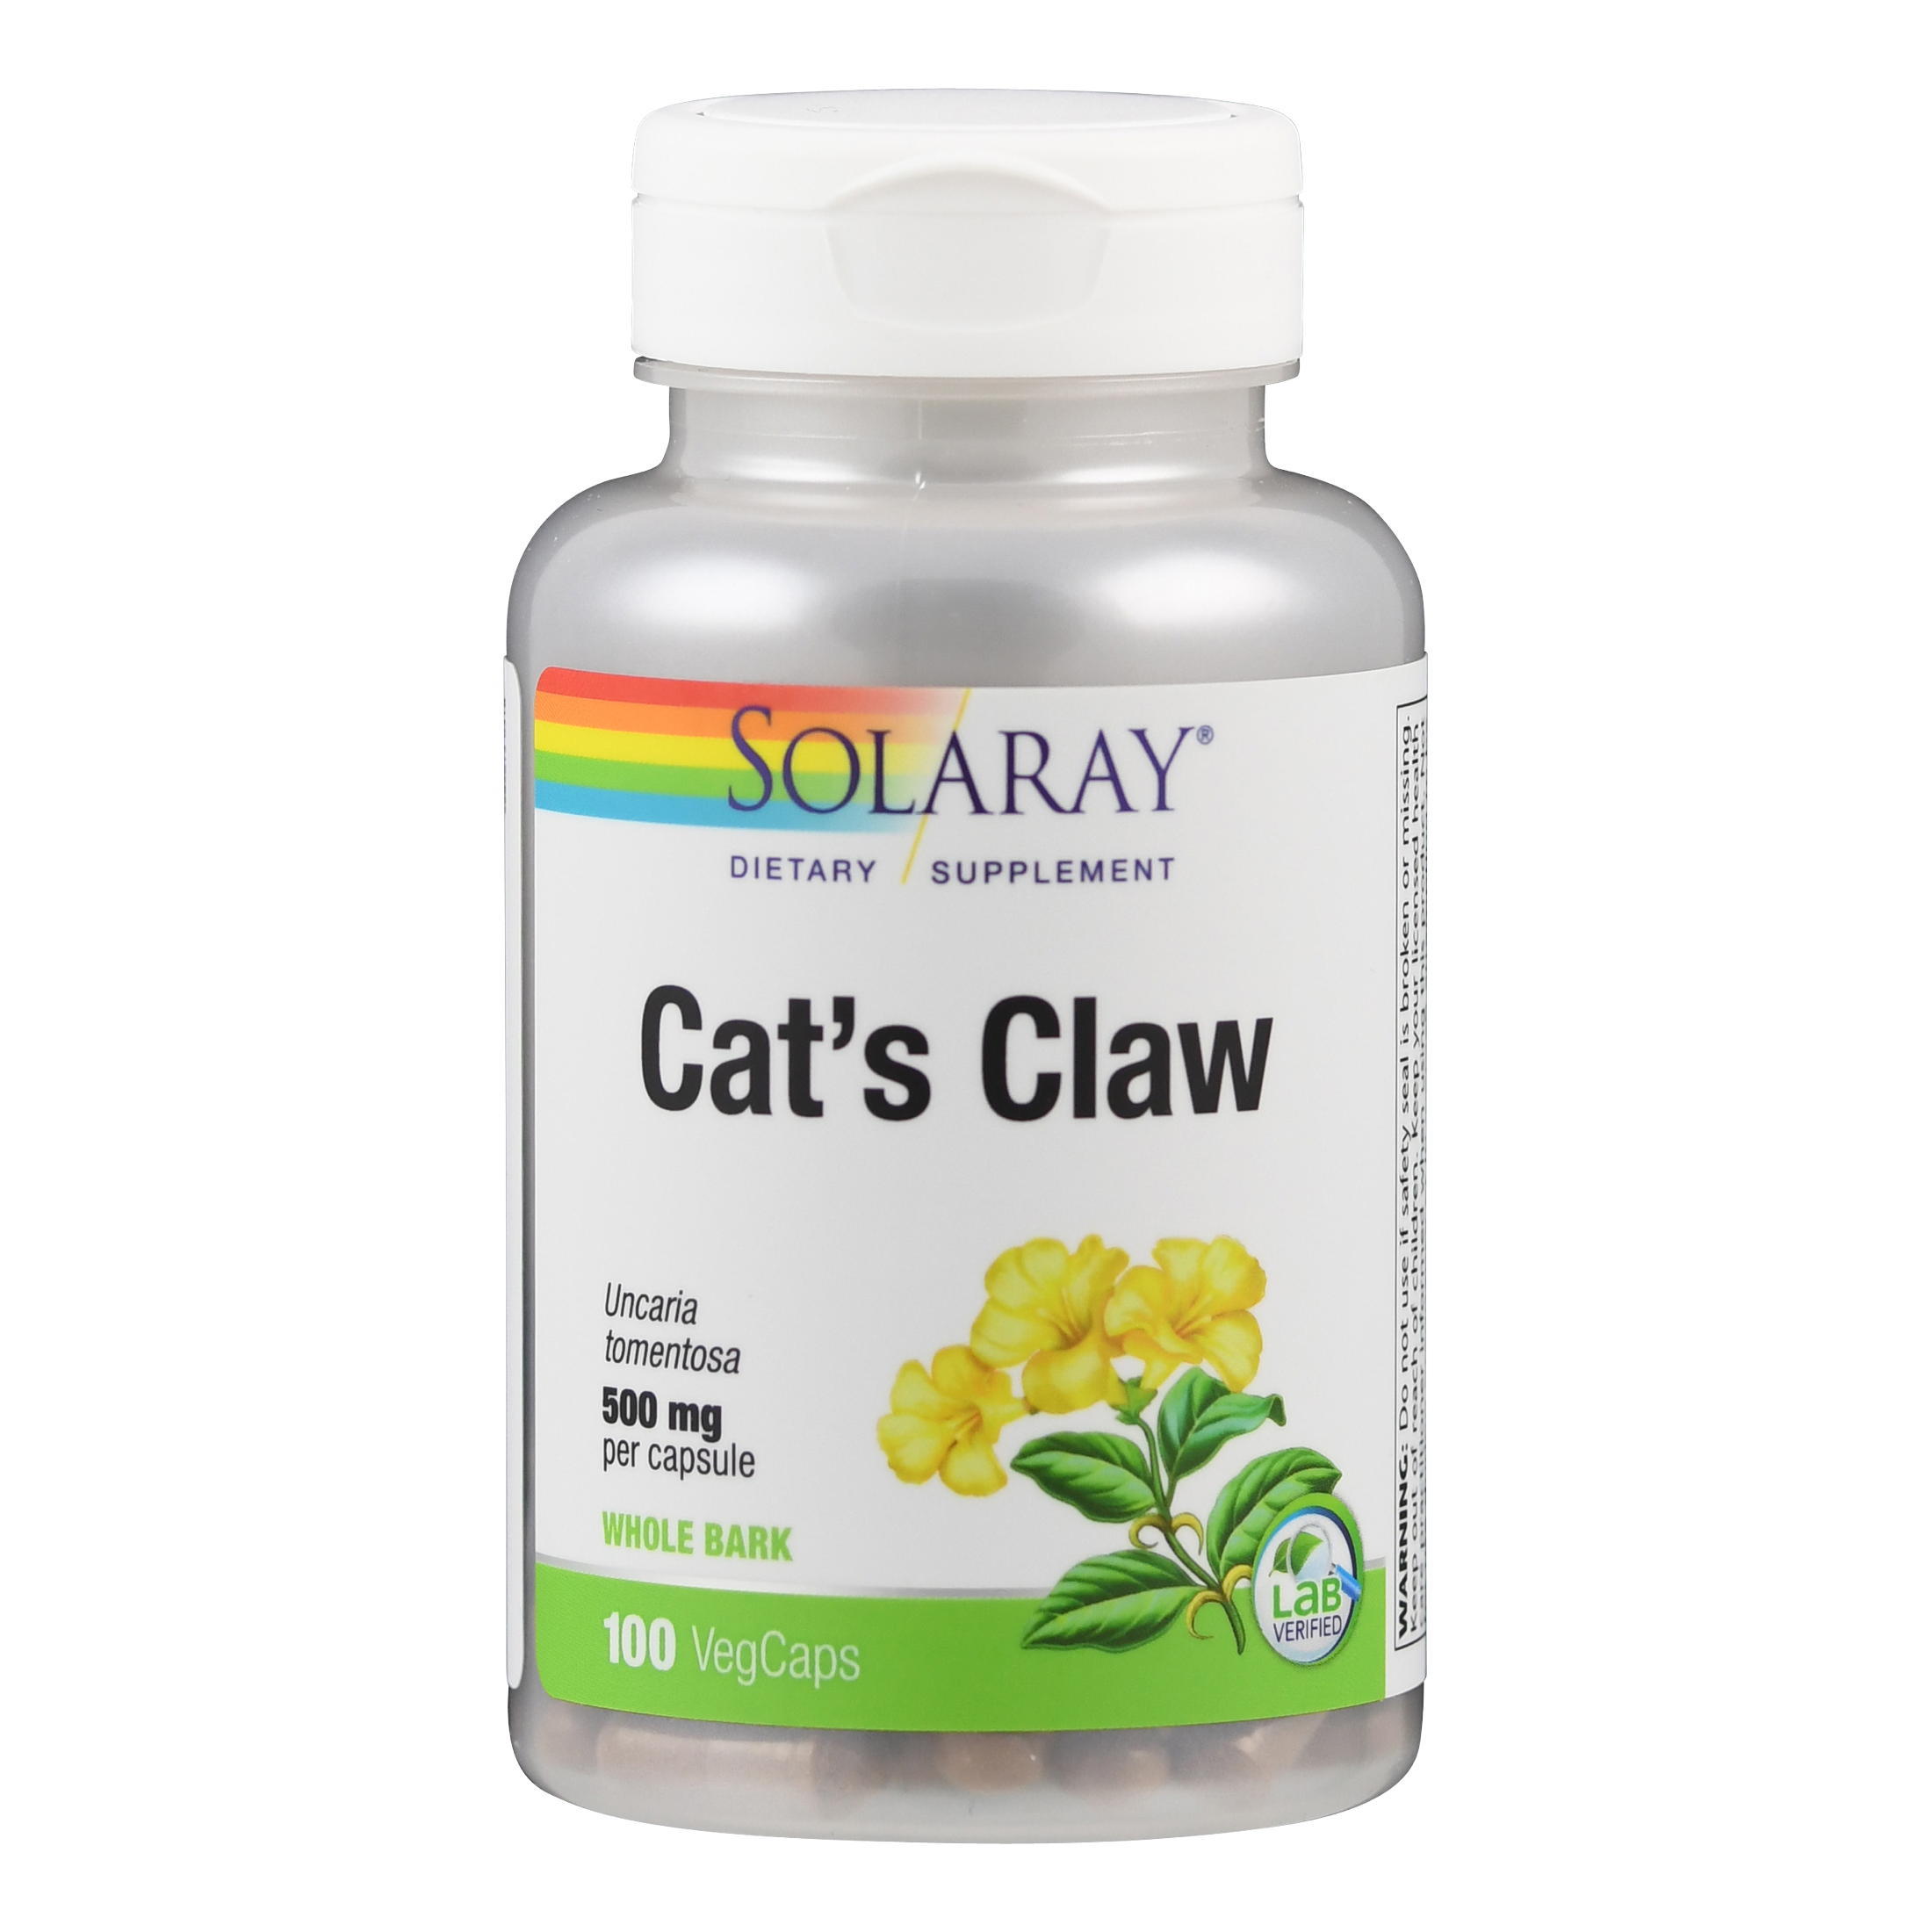 Cat s claw. Solaray, кошачий коготь. Cat's Claw 500mg. Кошачий коготь экстракт (Ункария томентоза). Solaray, цинк, 50 мг, 100 вегетарианских капсул.